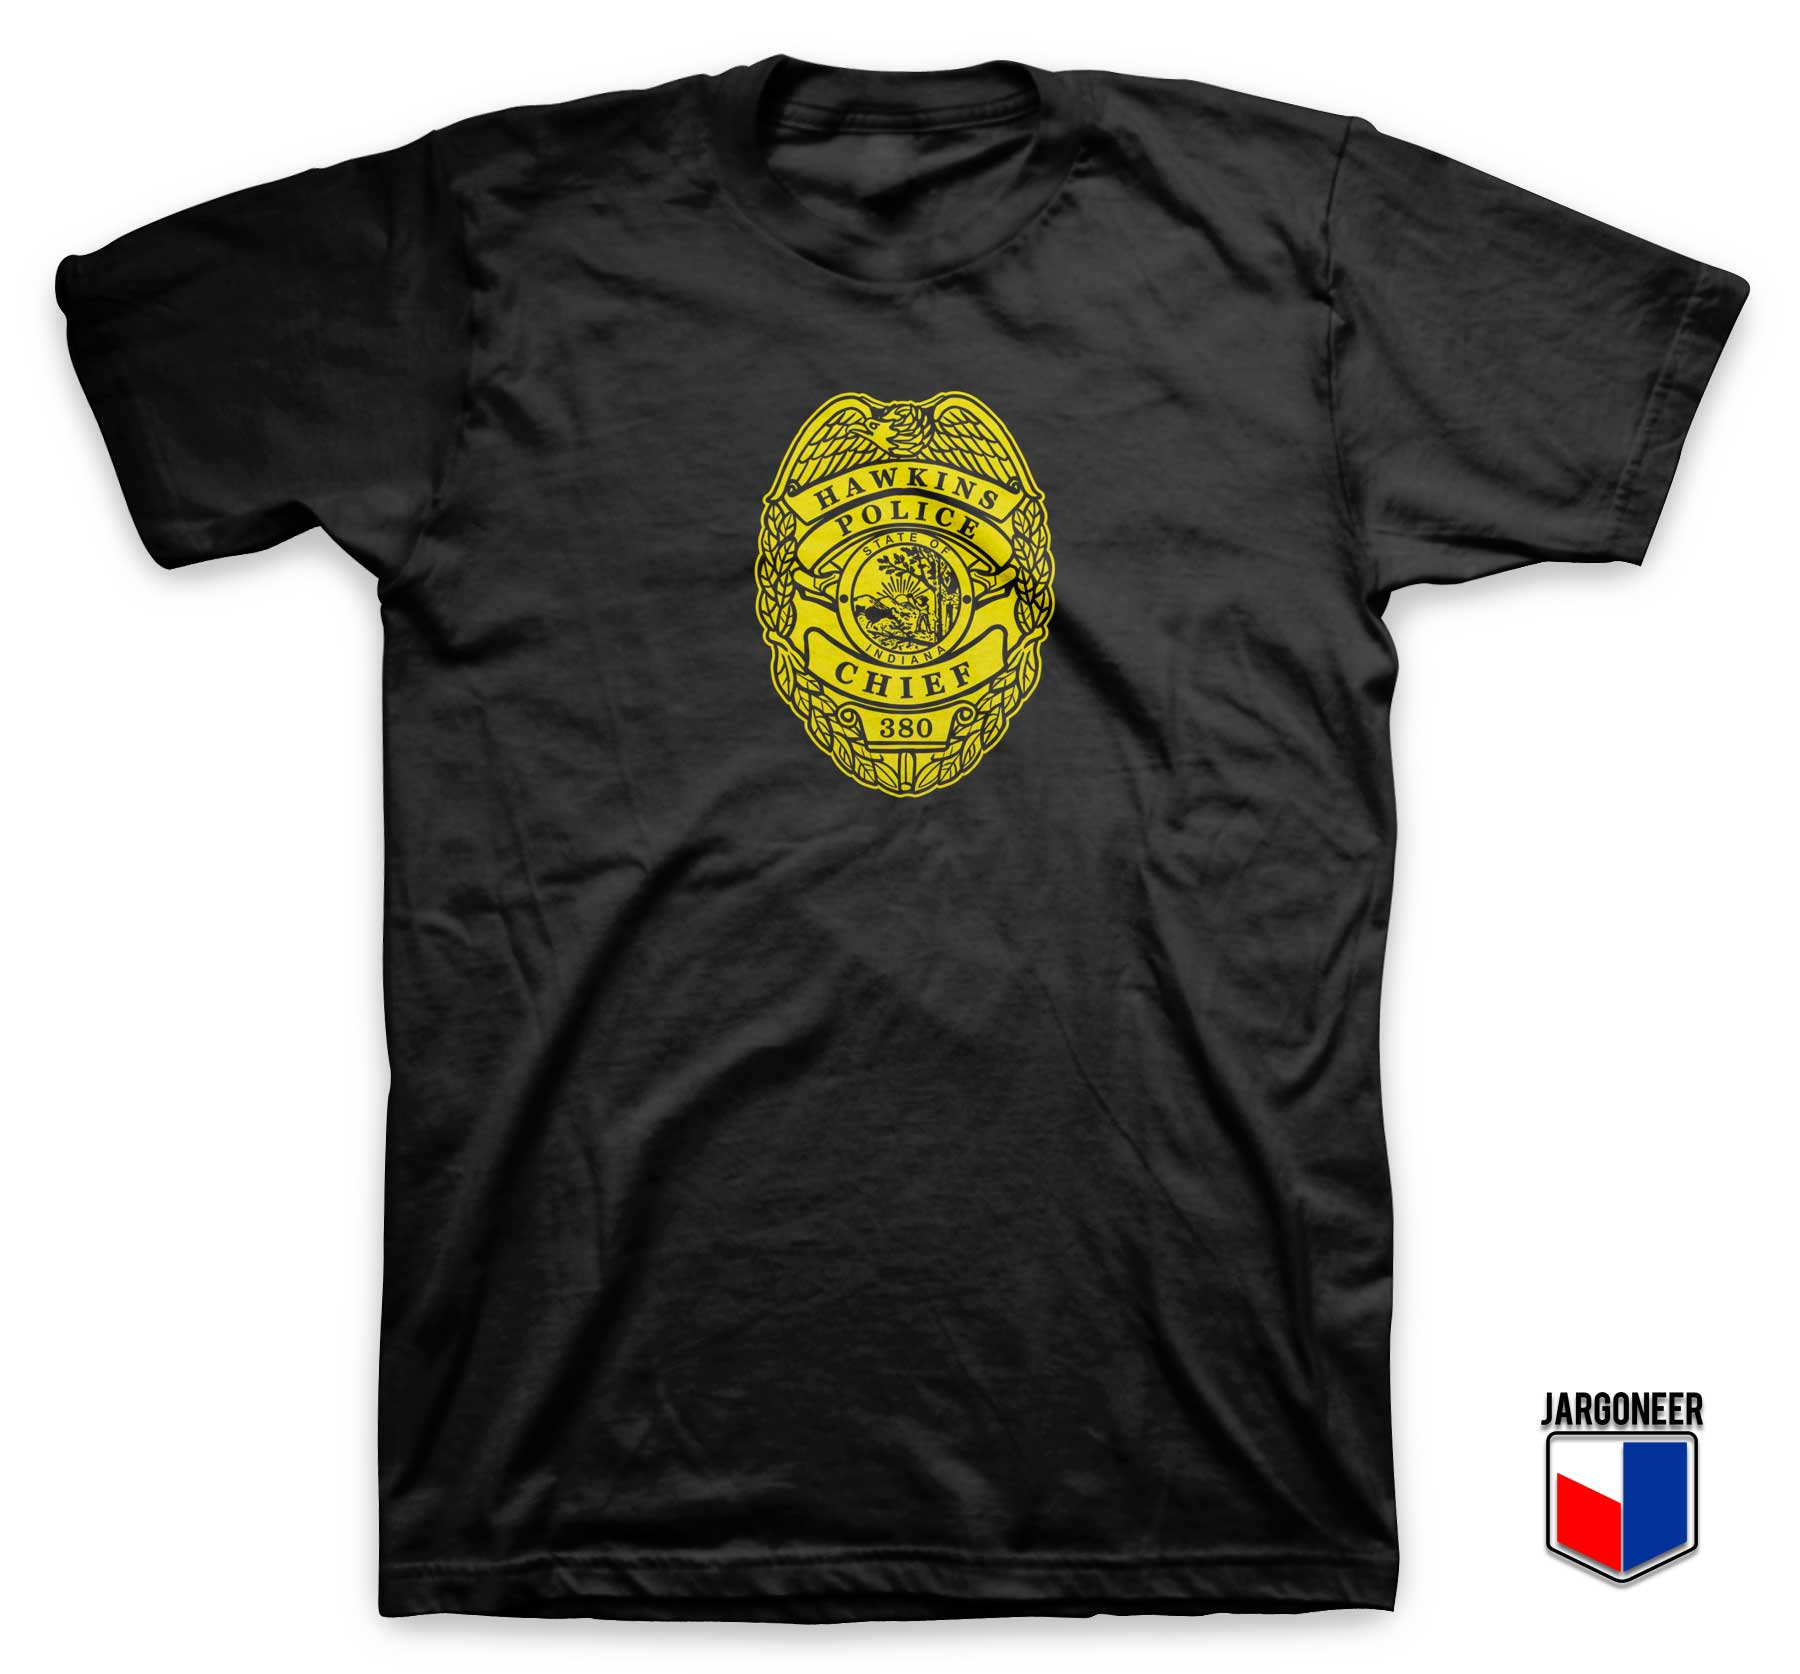 Hawkins Police Chief T Shirt - Shop Unique Graphic Cool Shirt Designs